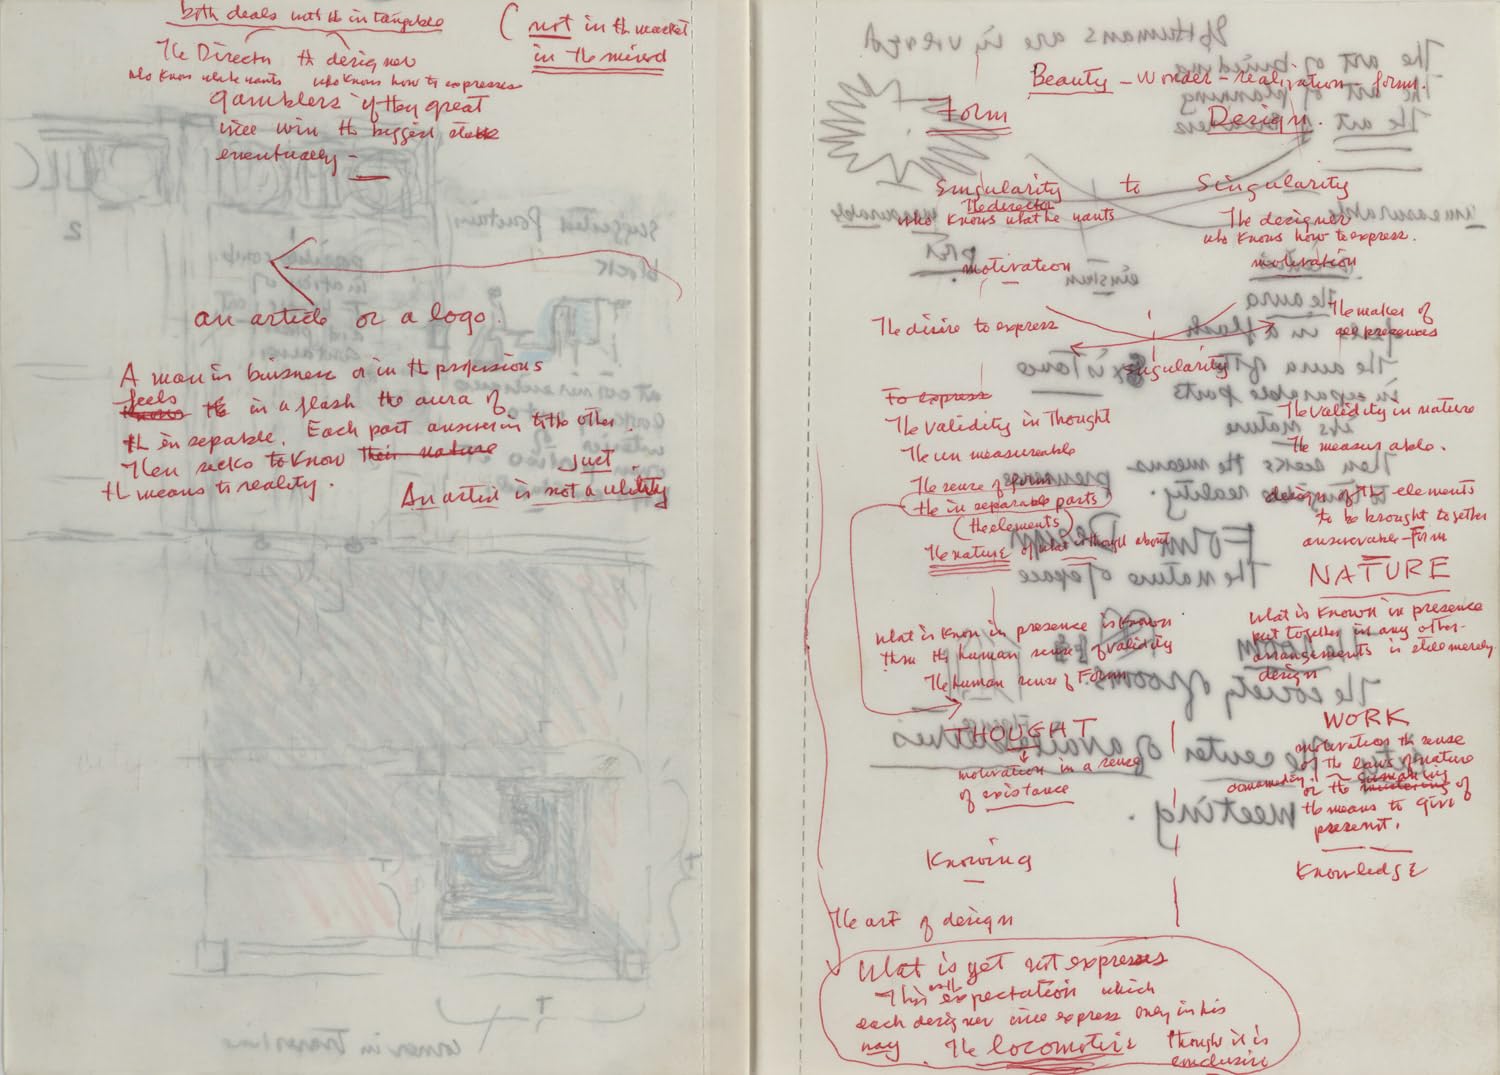 Louis I. Kahn: The Last Notebook